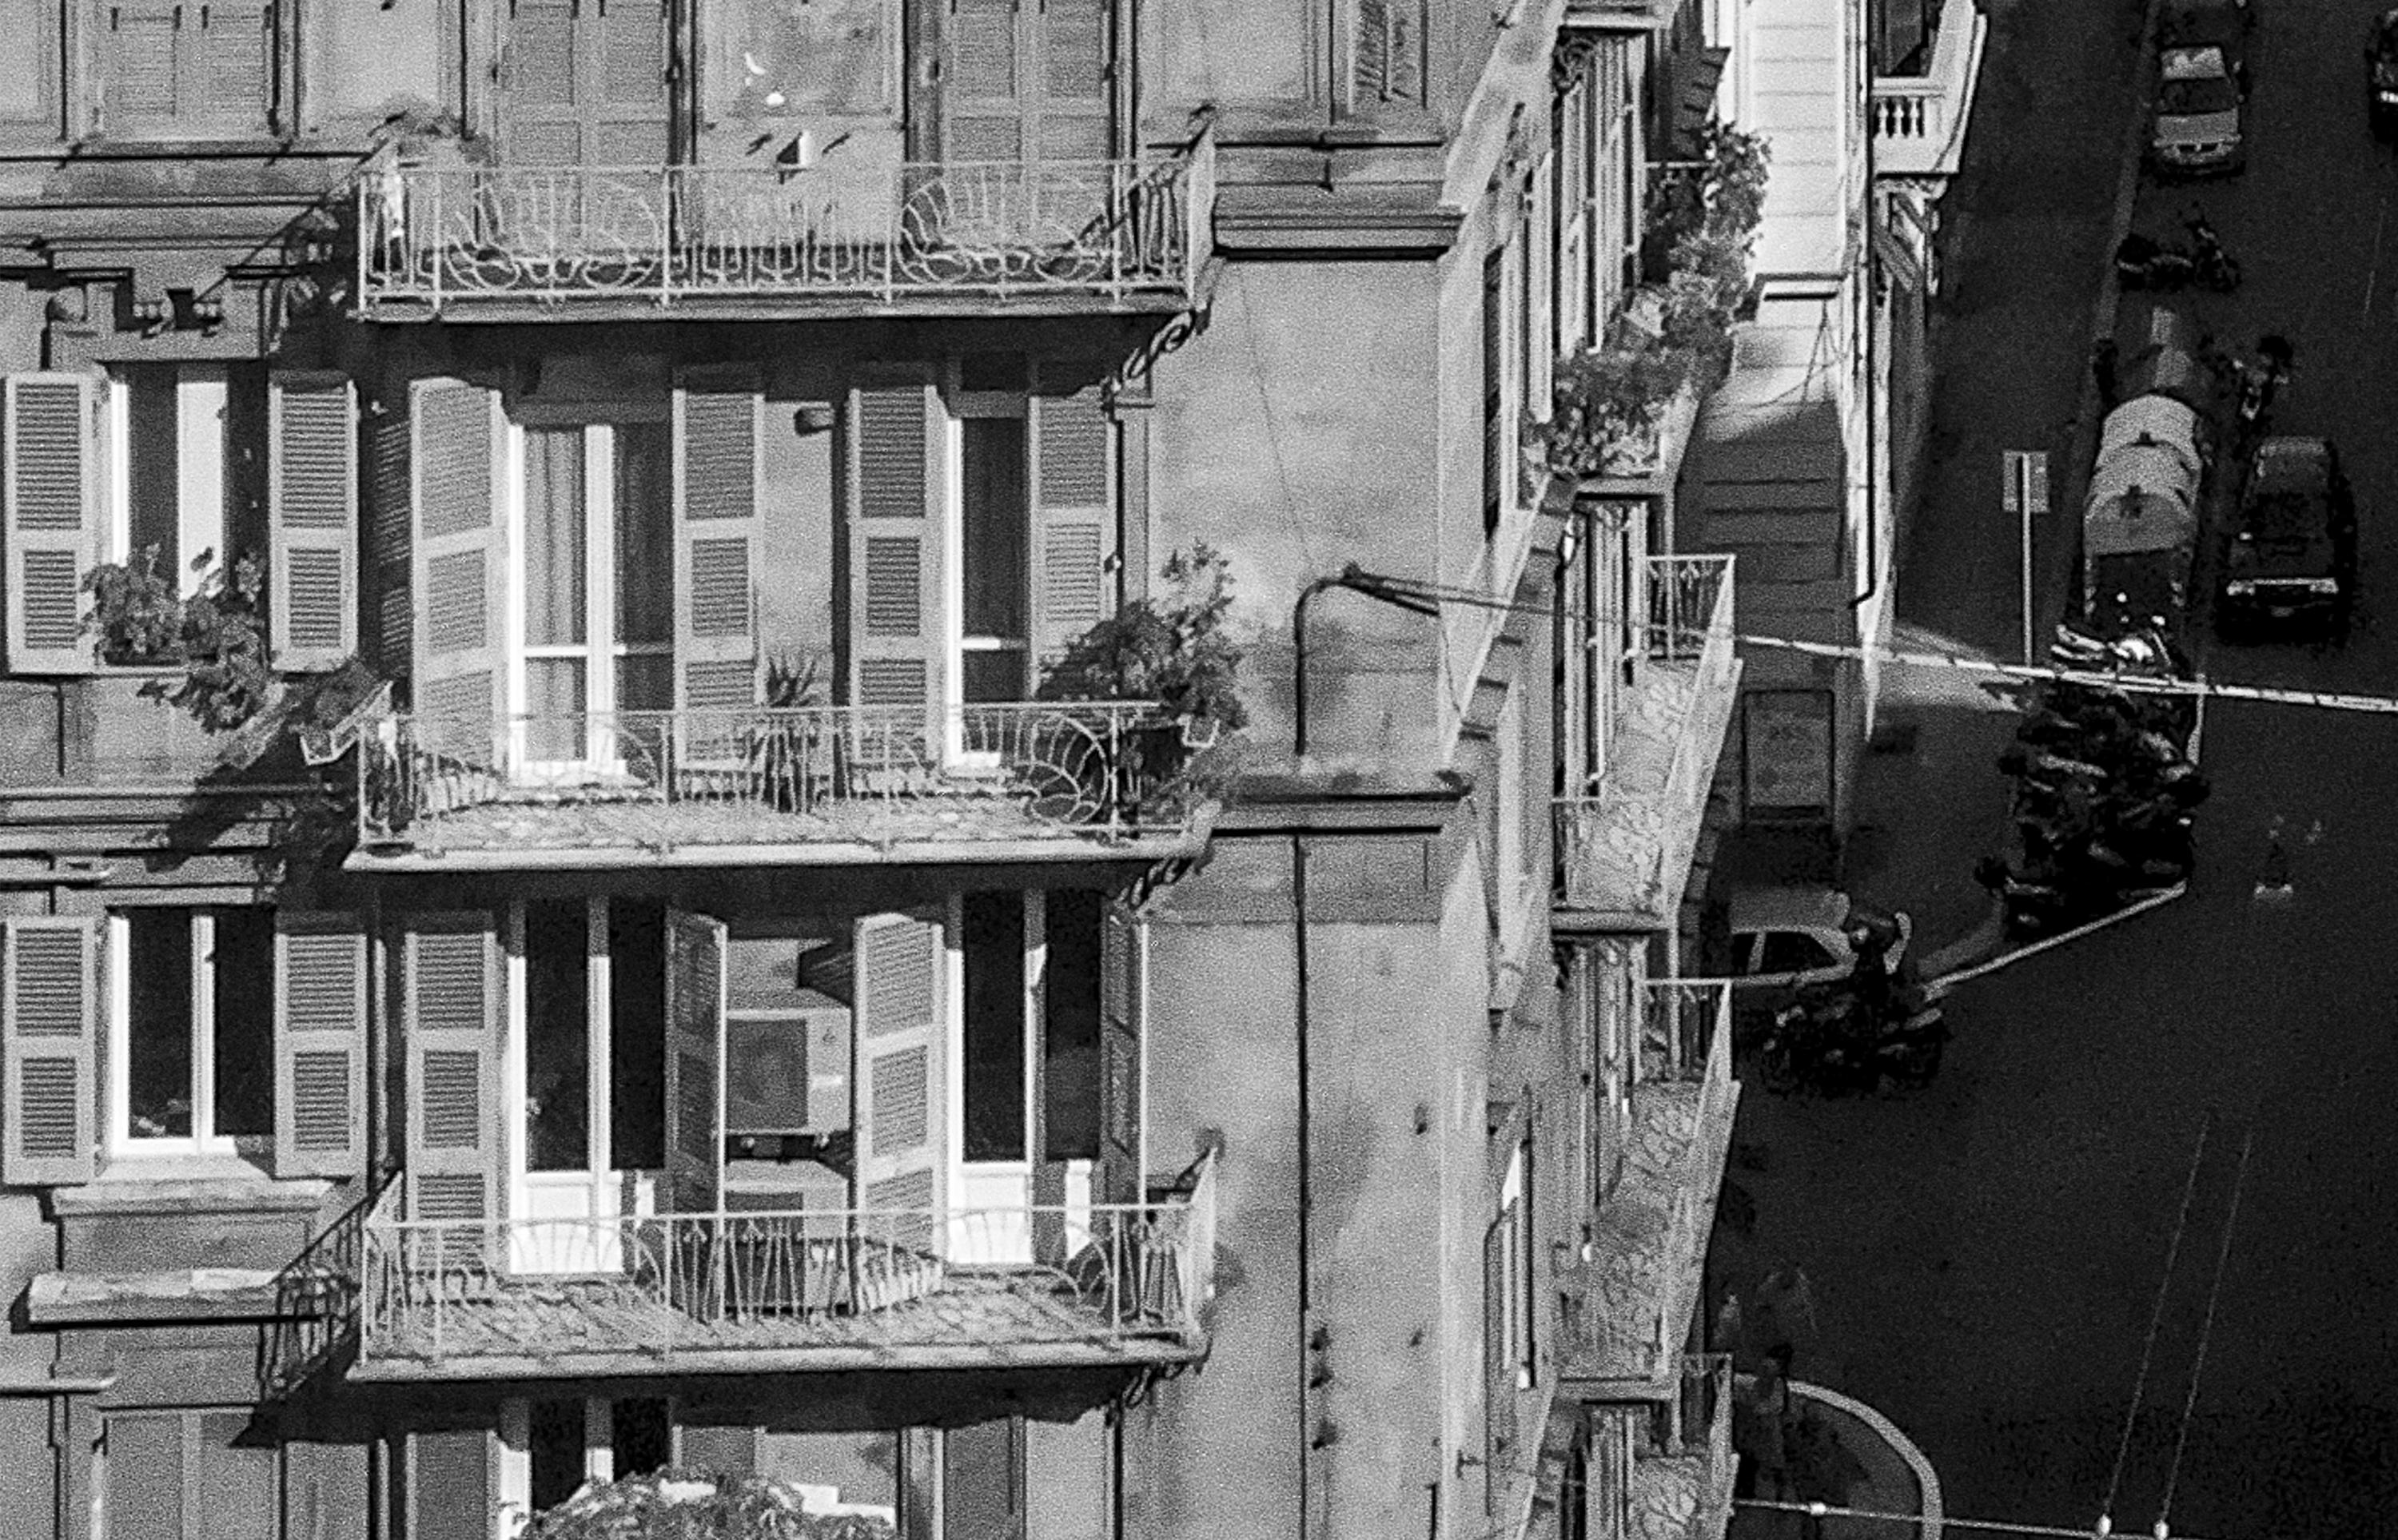 Genoa - black and white photograph - archival pigment print 17